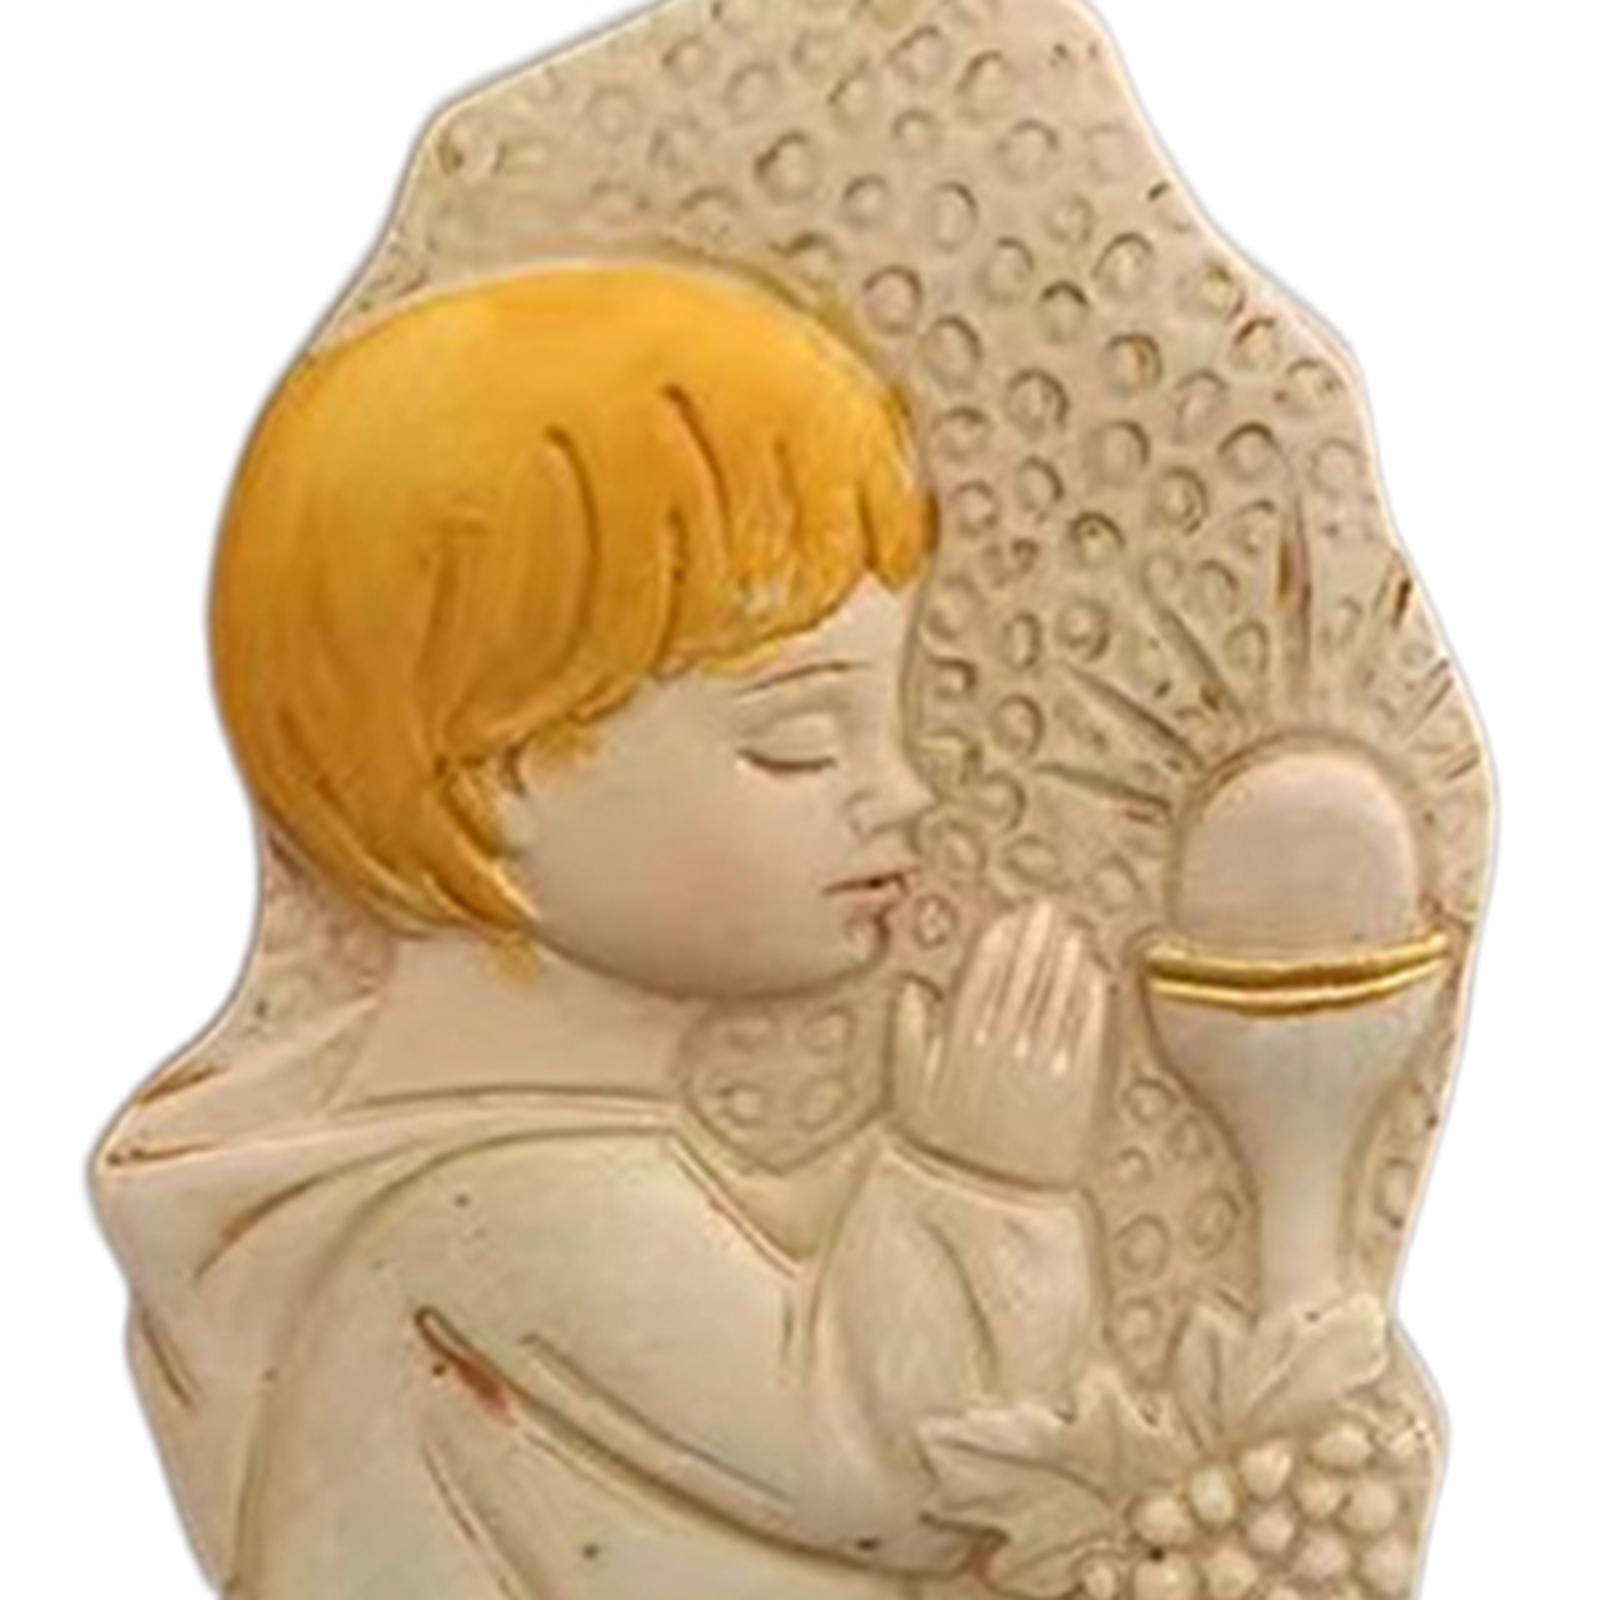 Prayer Figurine Praying Statue Nativity Catholic Religious Gift Ornaments